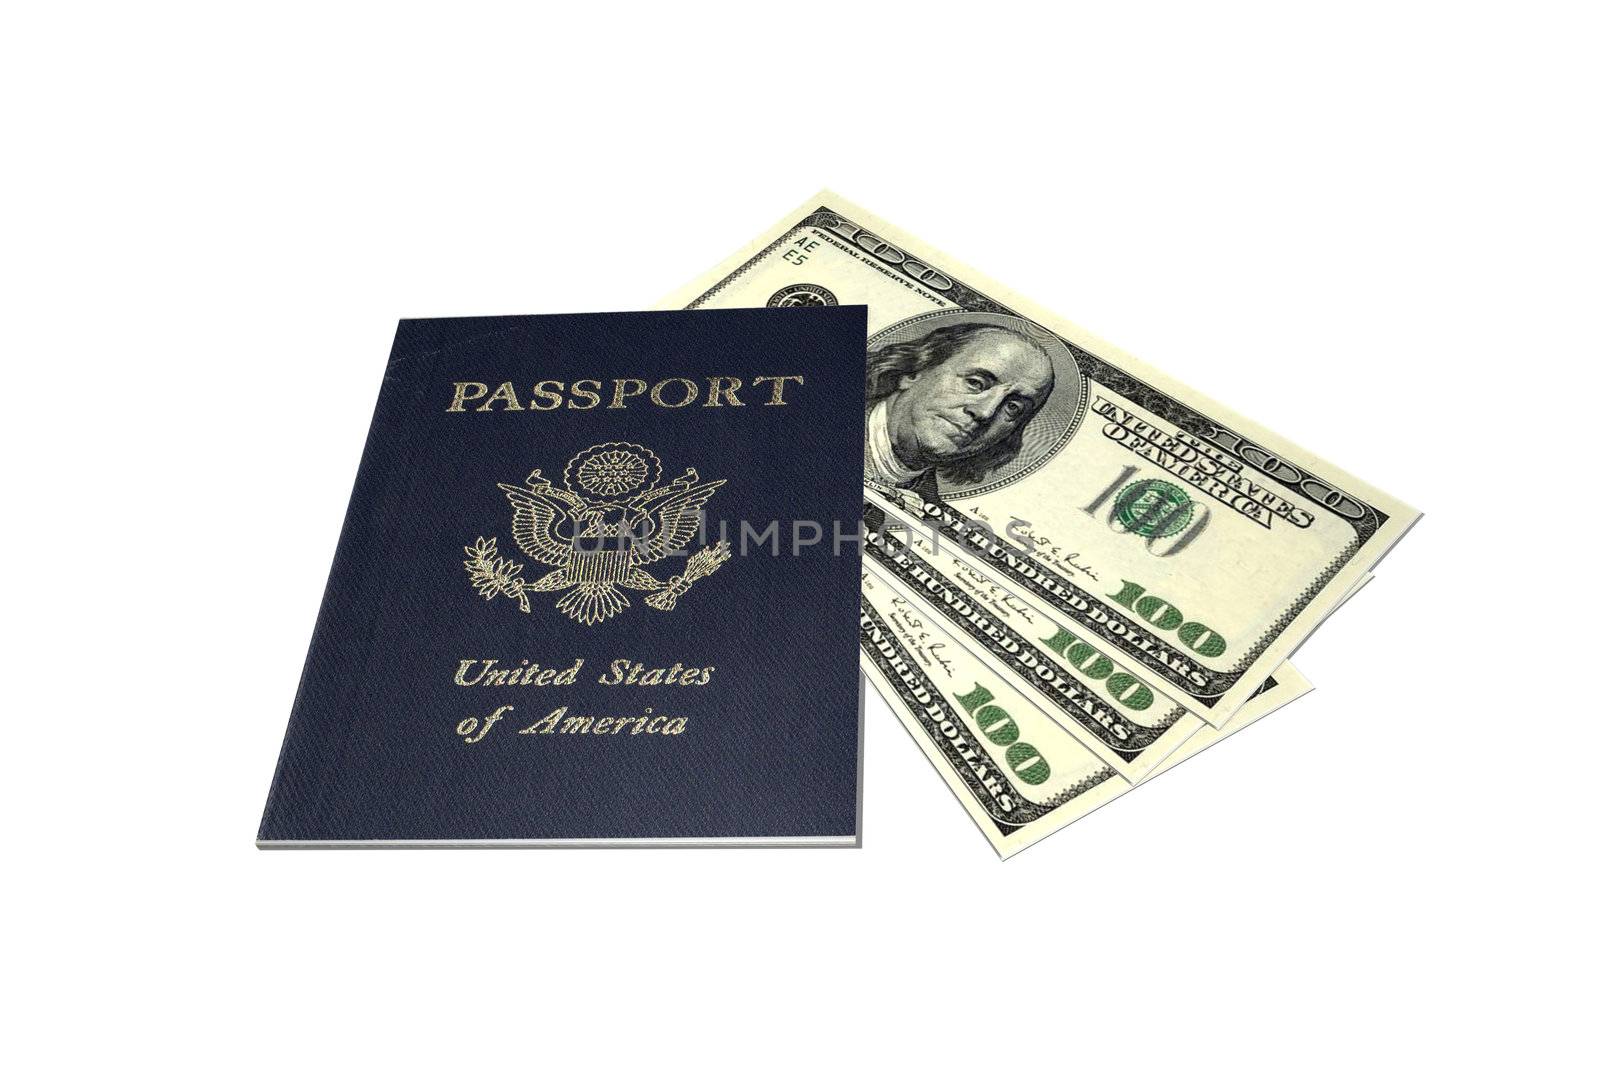 Image of a U.S. passport and money.